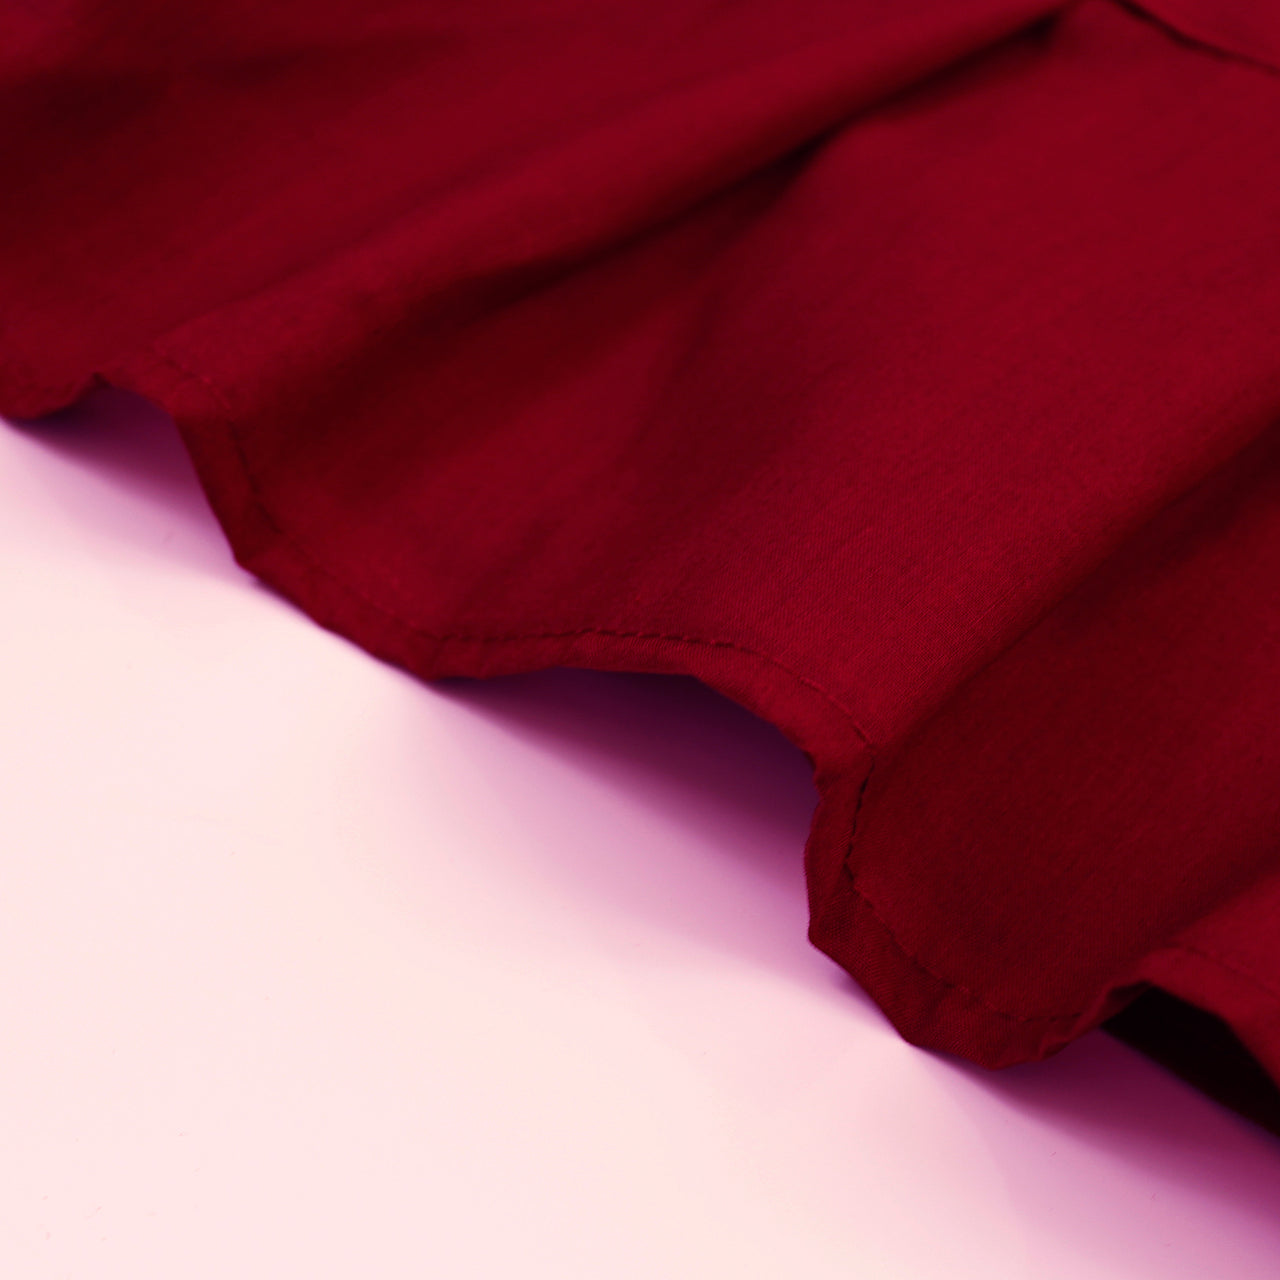 Wine - Sari (Saree) Petticoat - Available in S, M, L & XL - Underskirts For Sari's